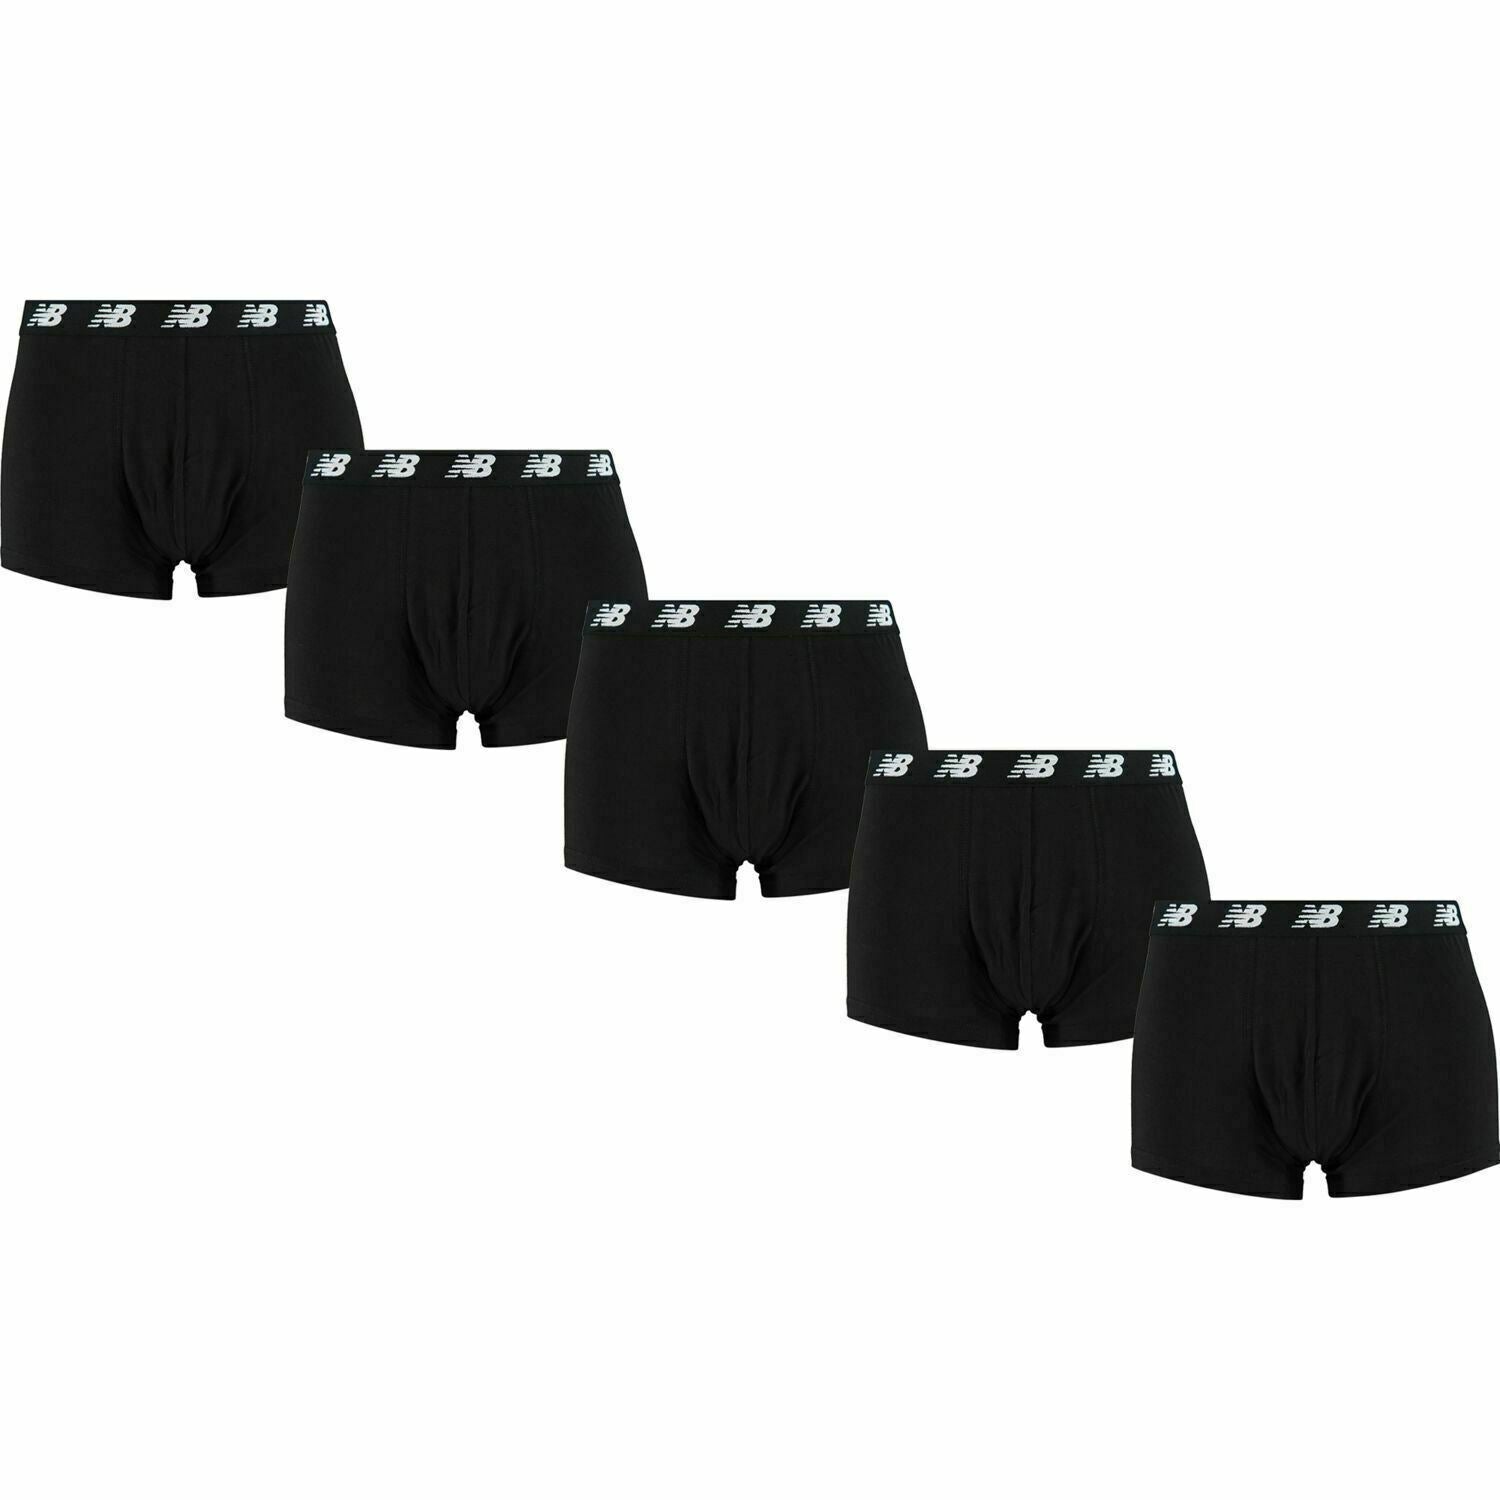 NEW BALANCE Underwear: Men's 5-Pack Velocity Cotton Boxers Trunks, Black,  size S